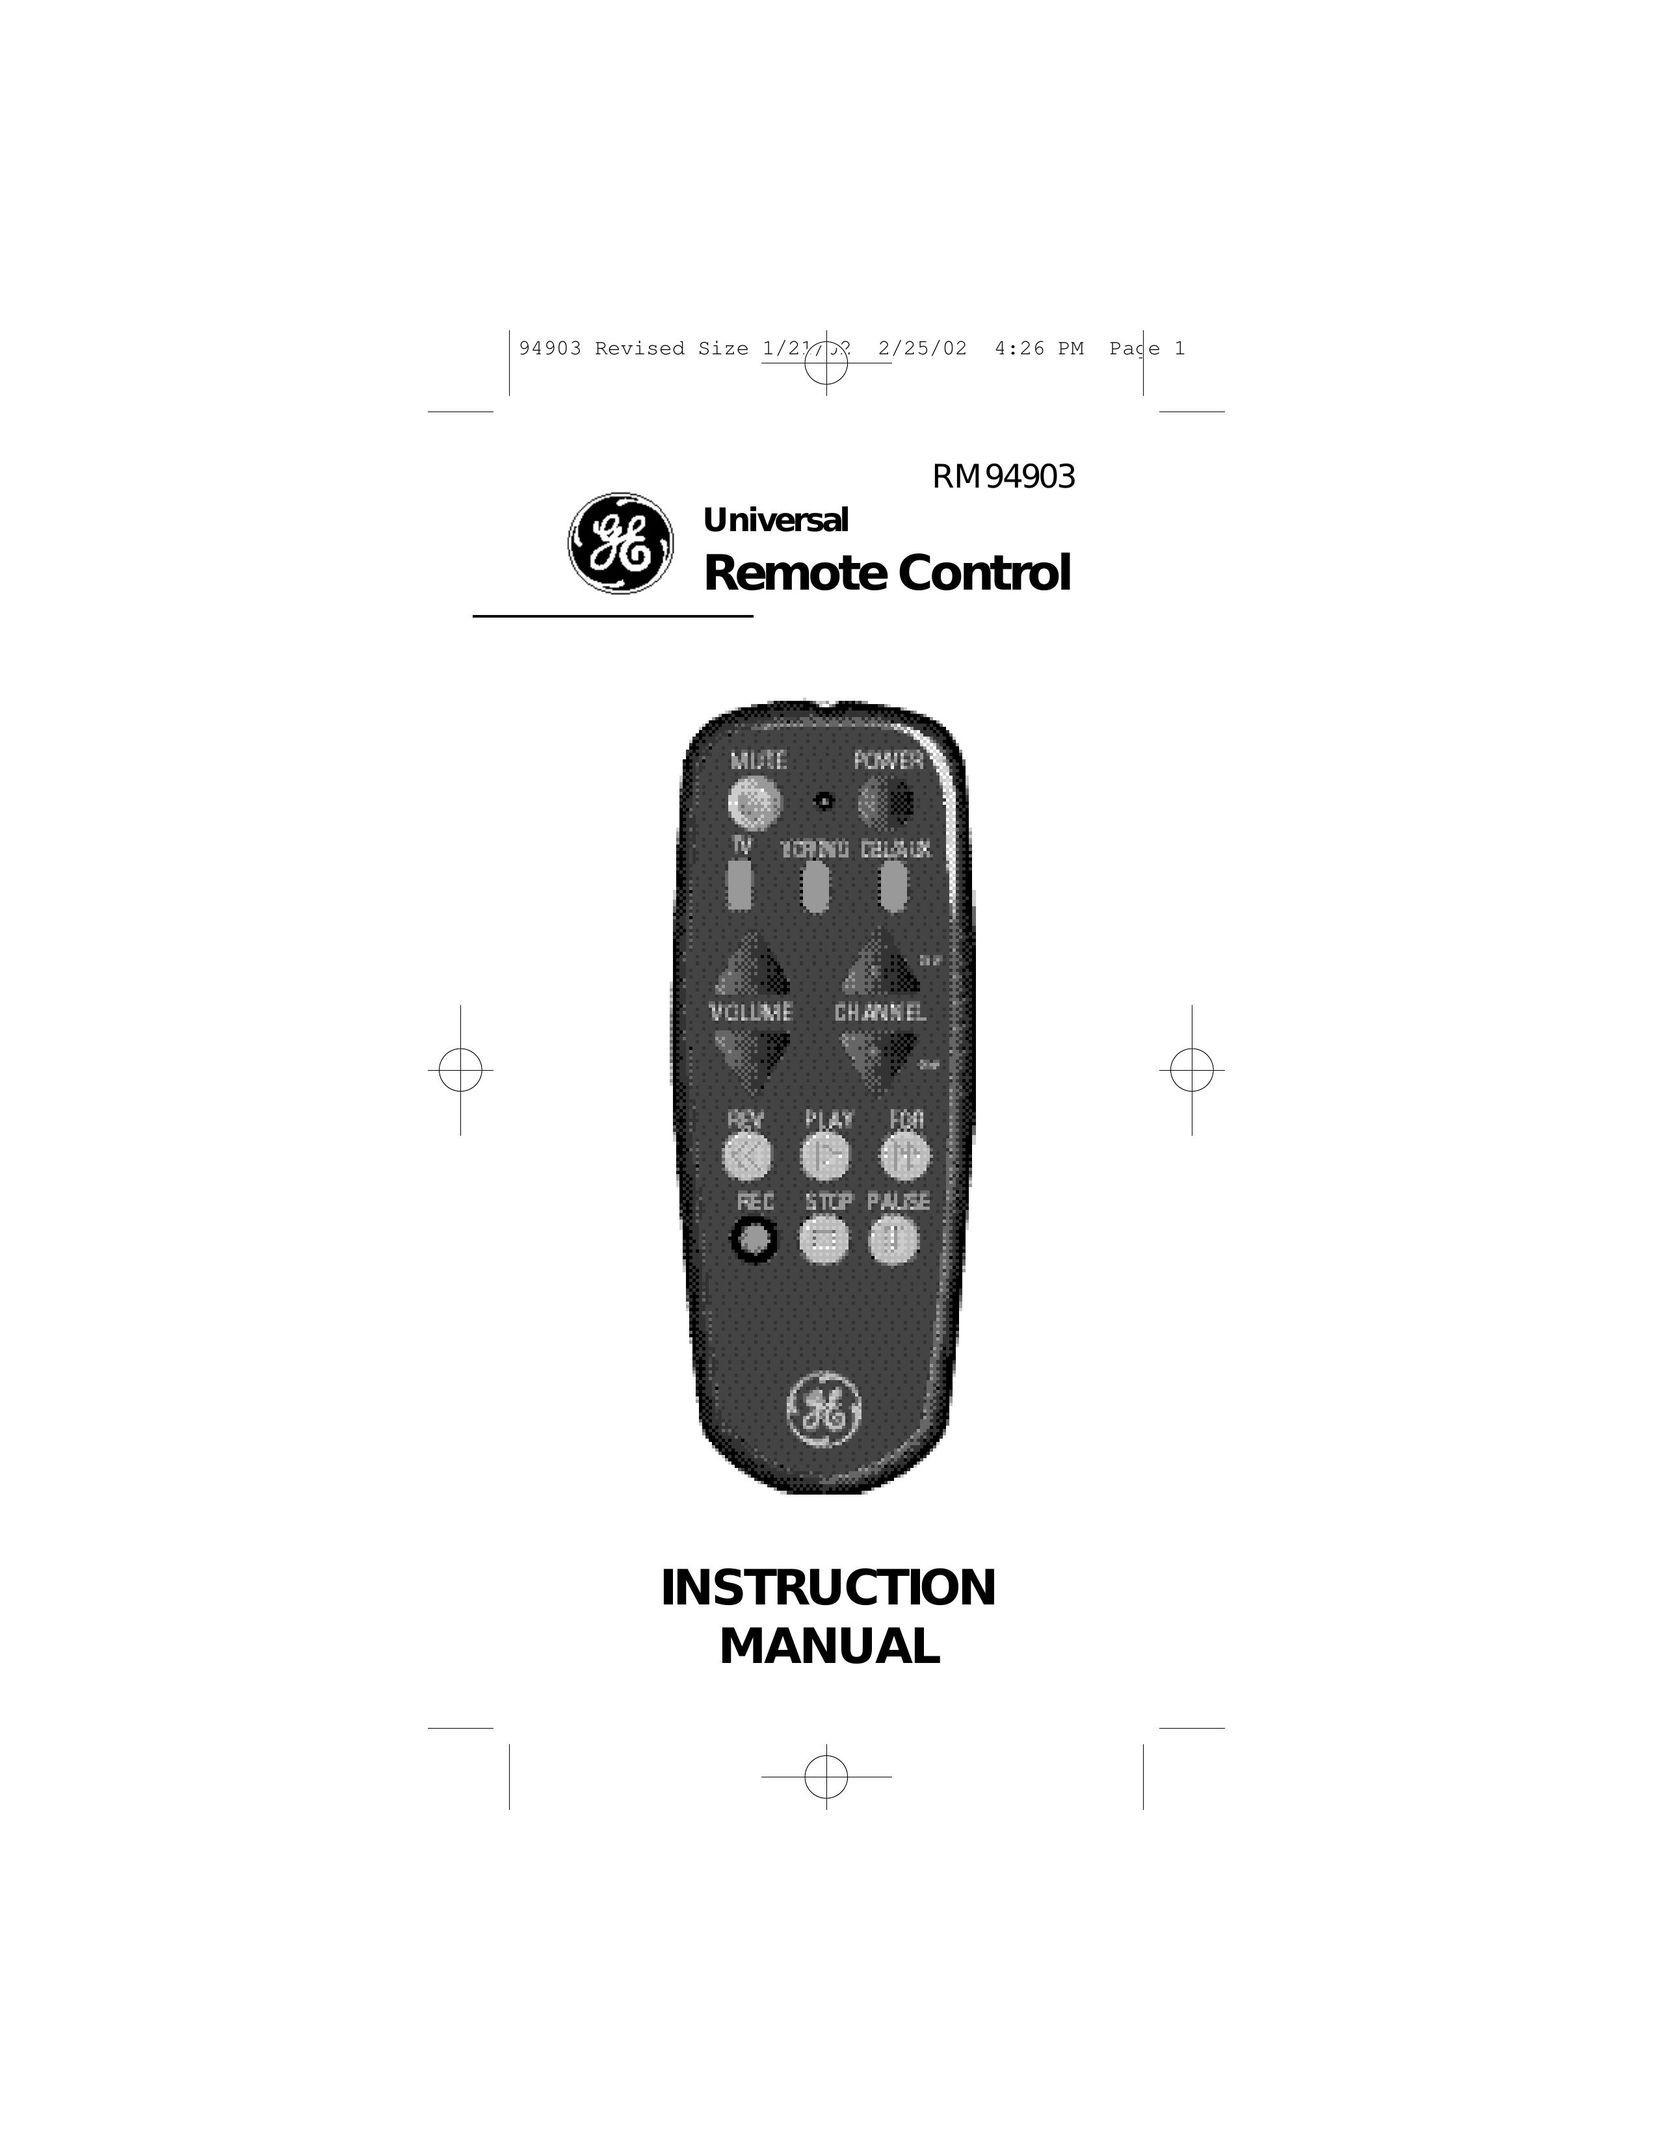 GE RM94903 Universal Remote User Manual